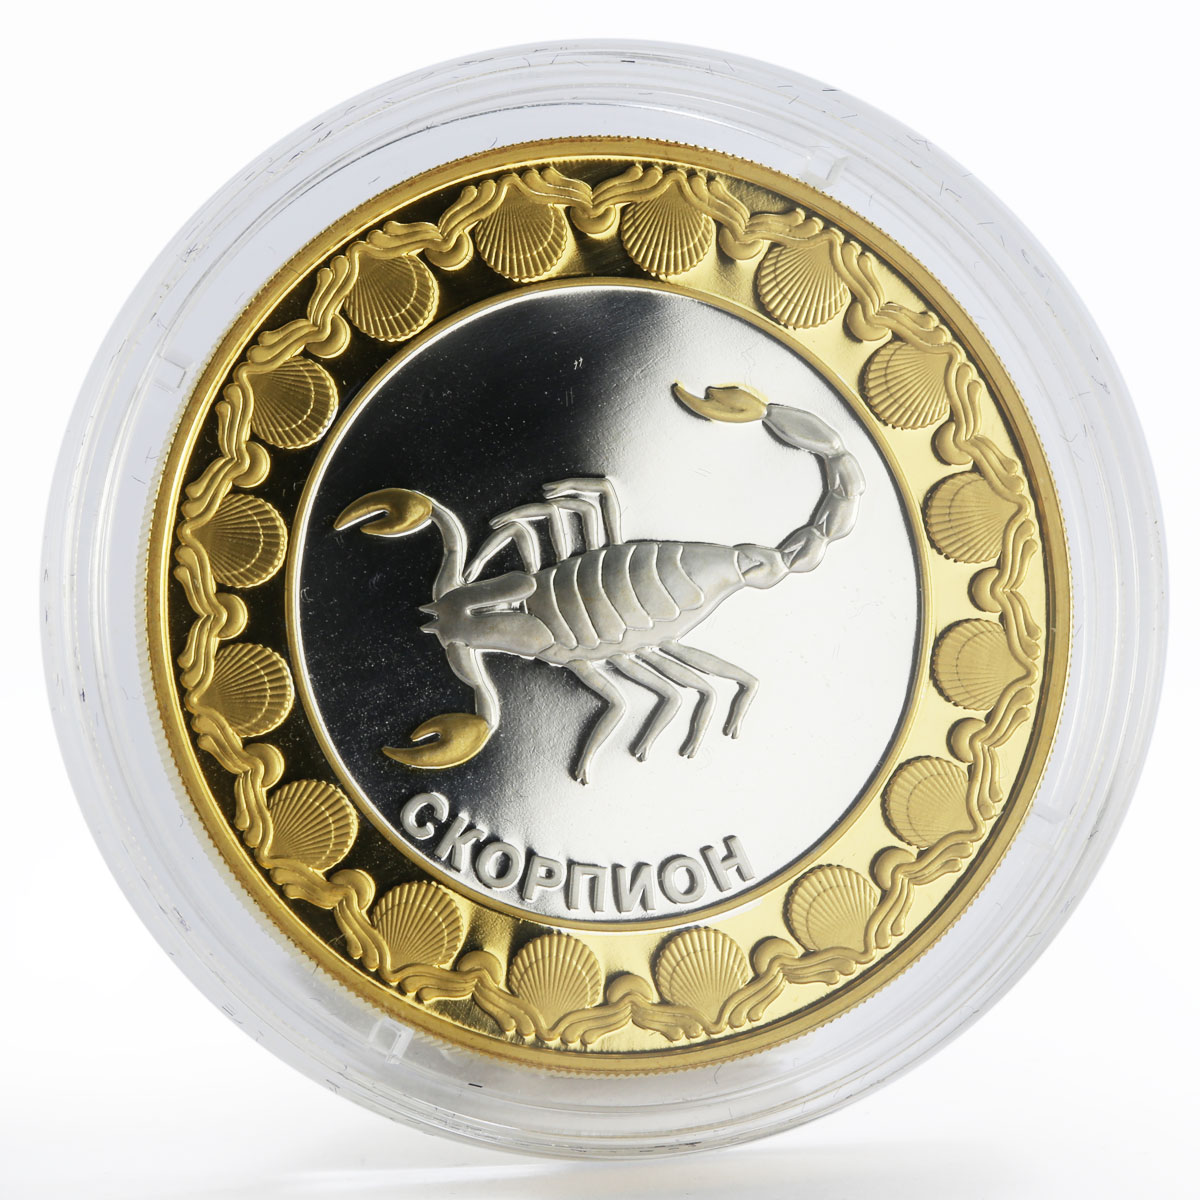 Tokelau 5 dollars Zodiac Scorpio gilded silver coin 2012